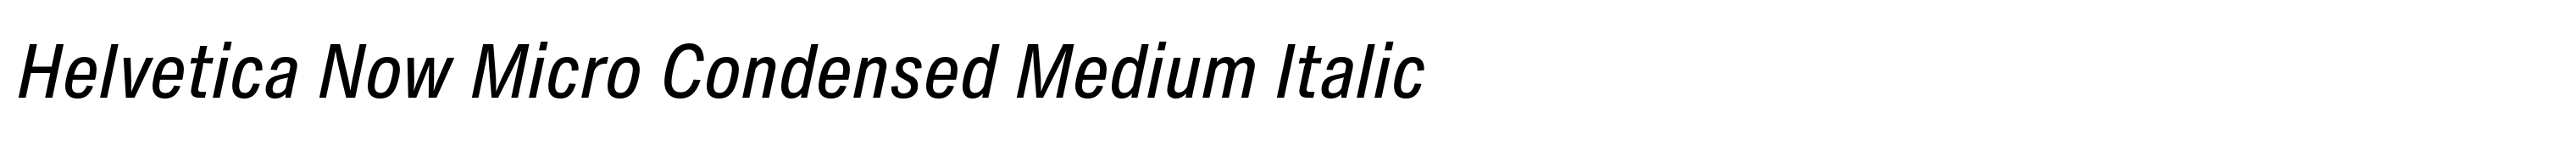 Helvetica Now Micro Condensed Medium Italic